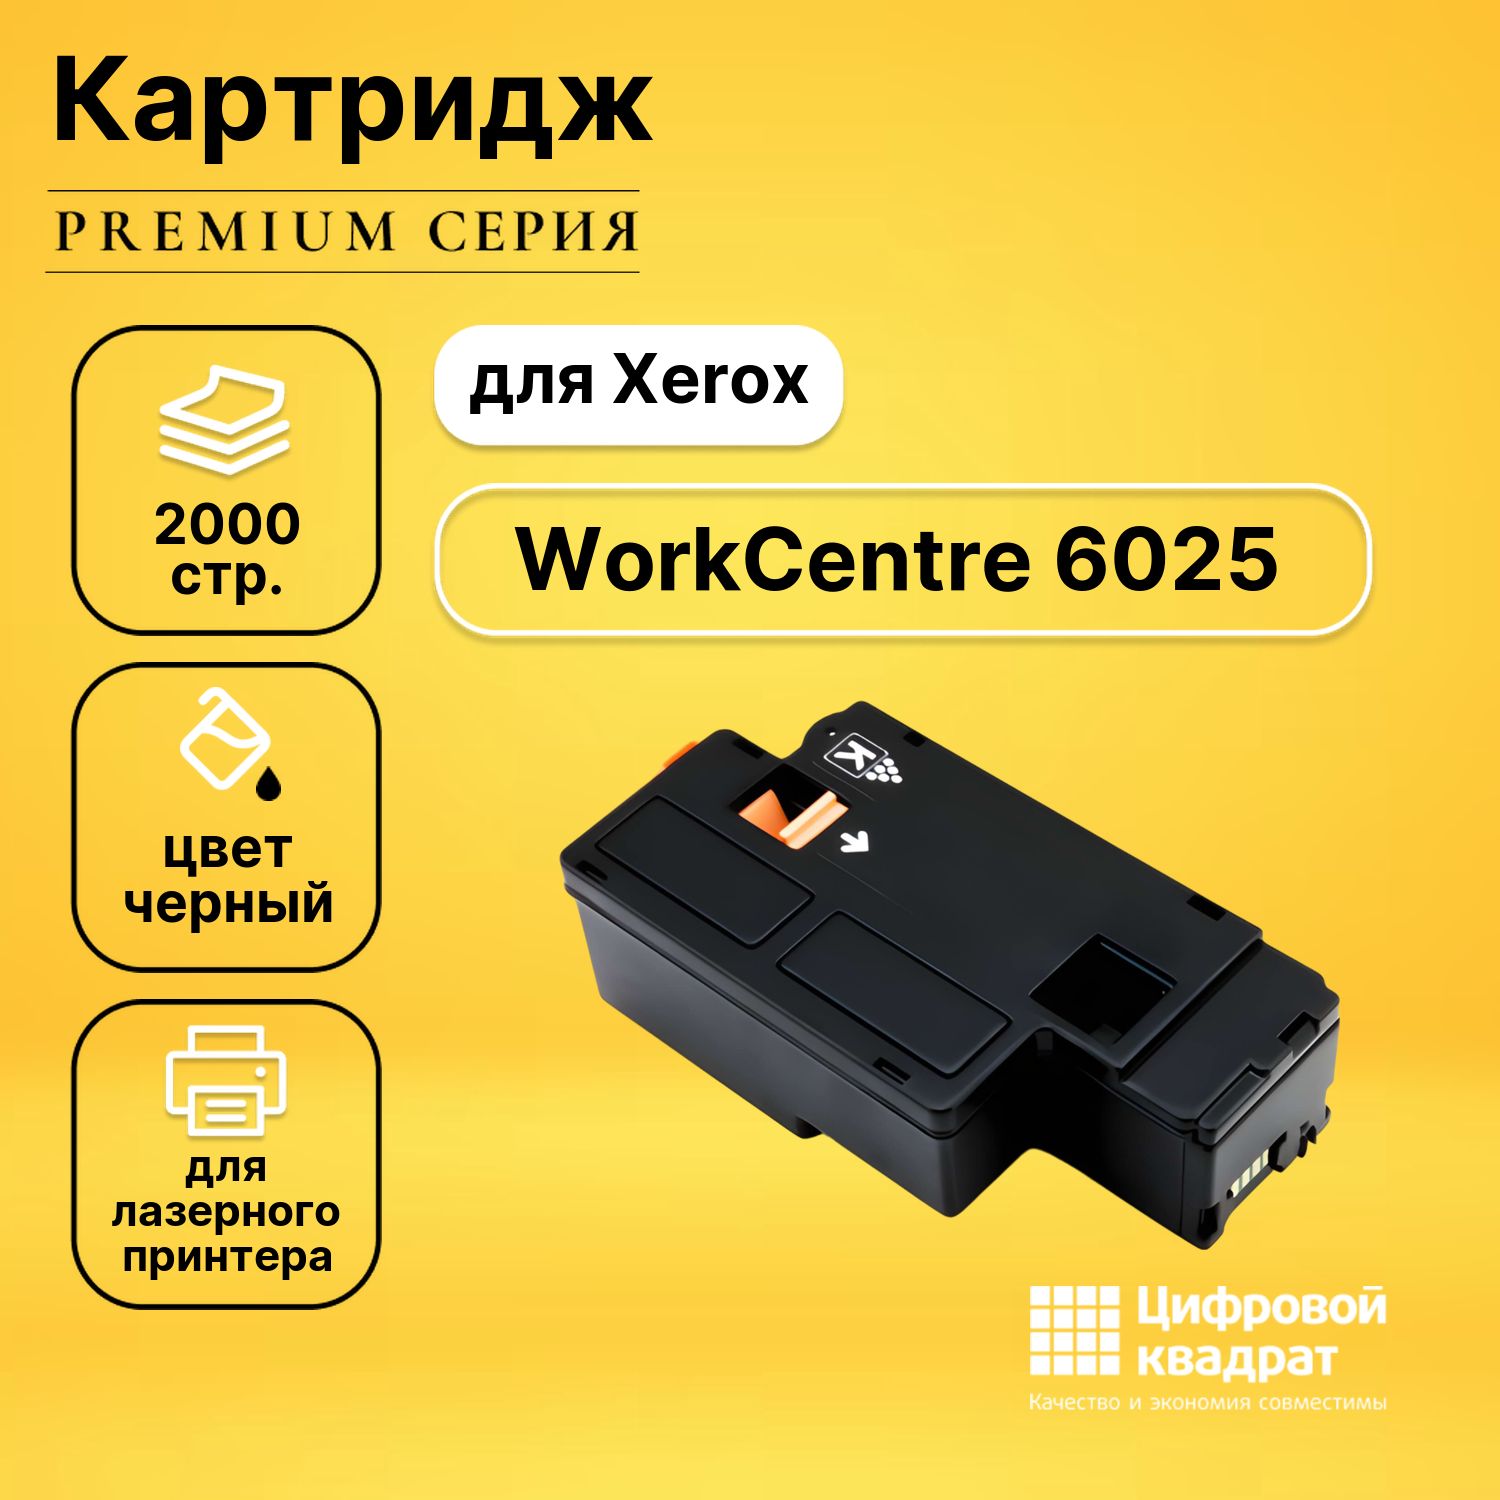 Картридж DS для Xerox WorkCentre 6025 совместимый